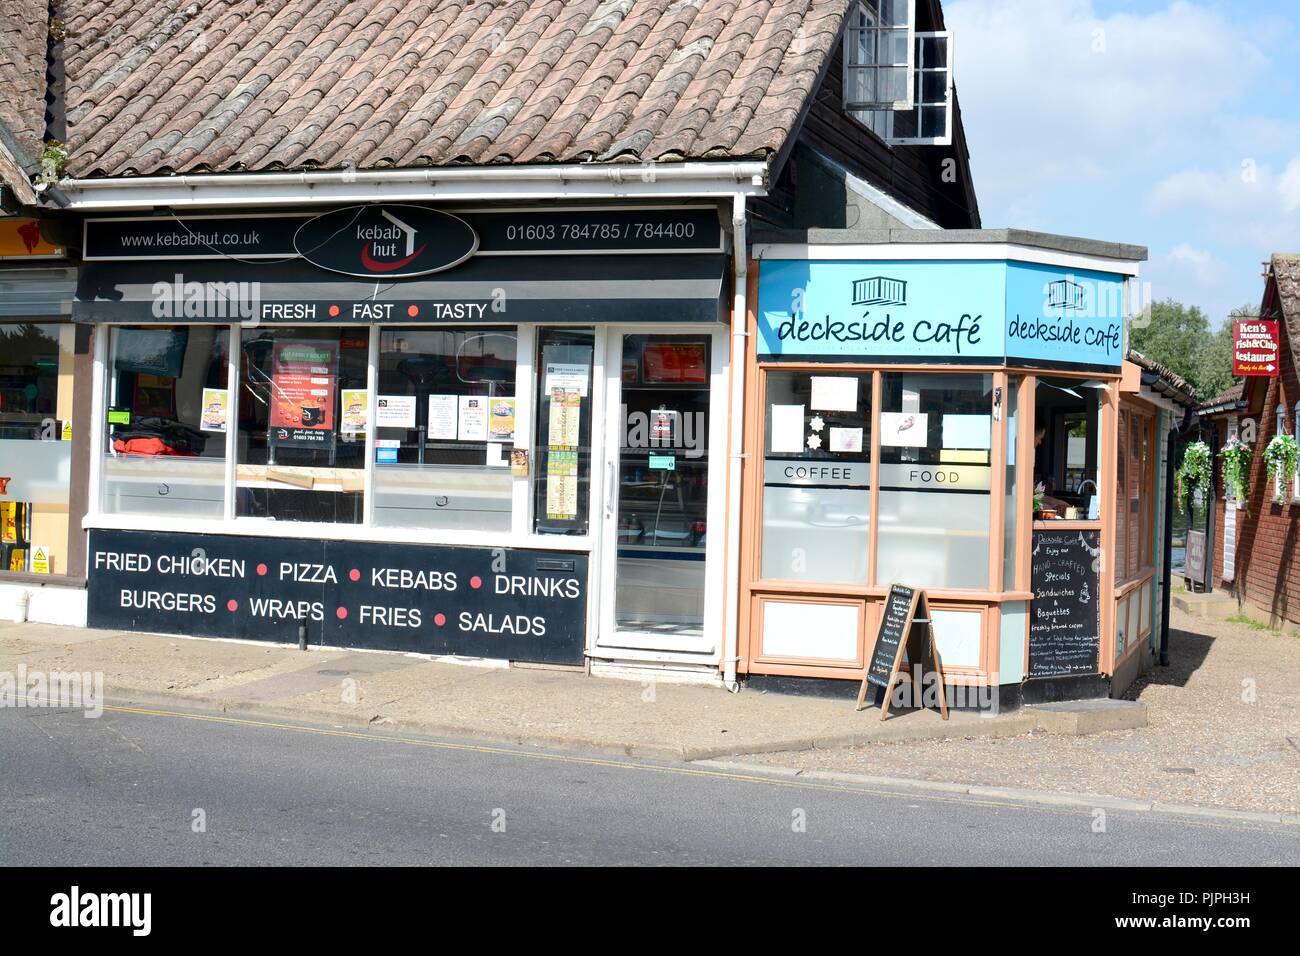 Dockside café y kebab hut, Wroxham, Norfolk, Inglaterra, Reino Unido. Foto de stock